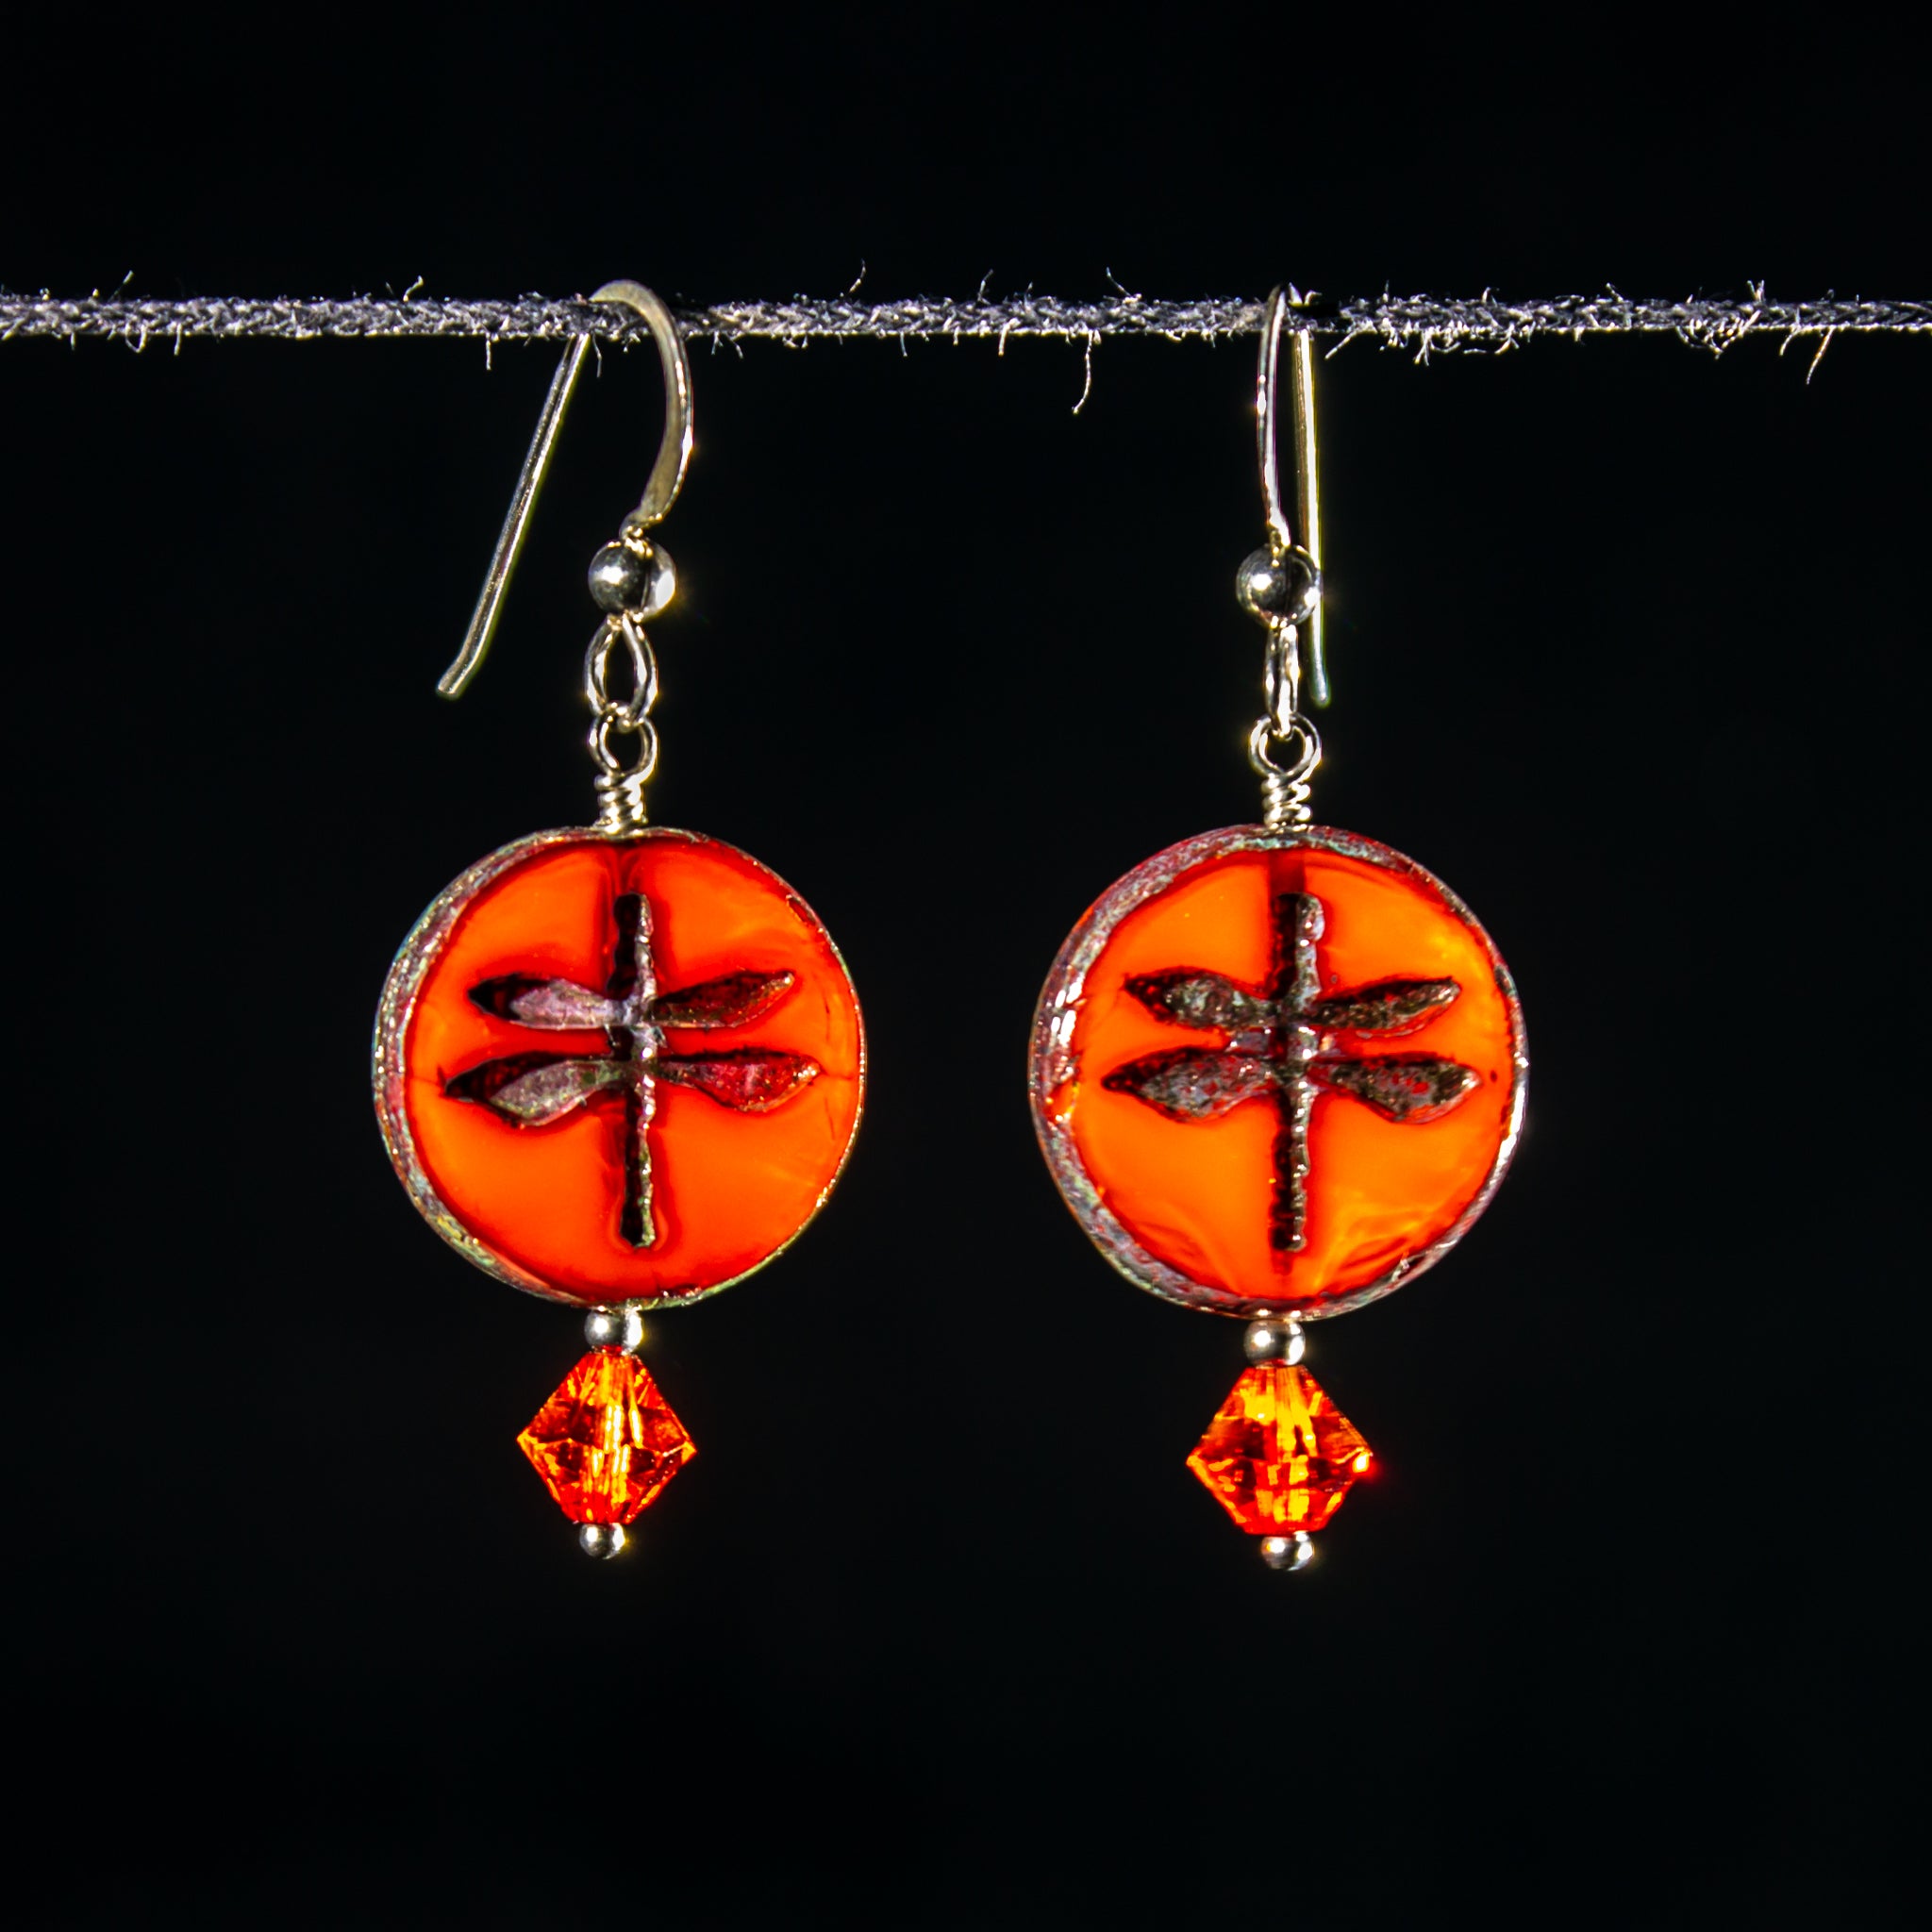 Red Dragonfly earrings